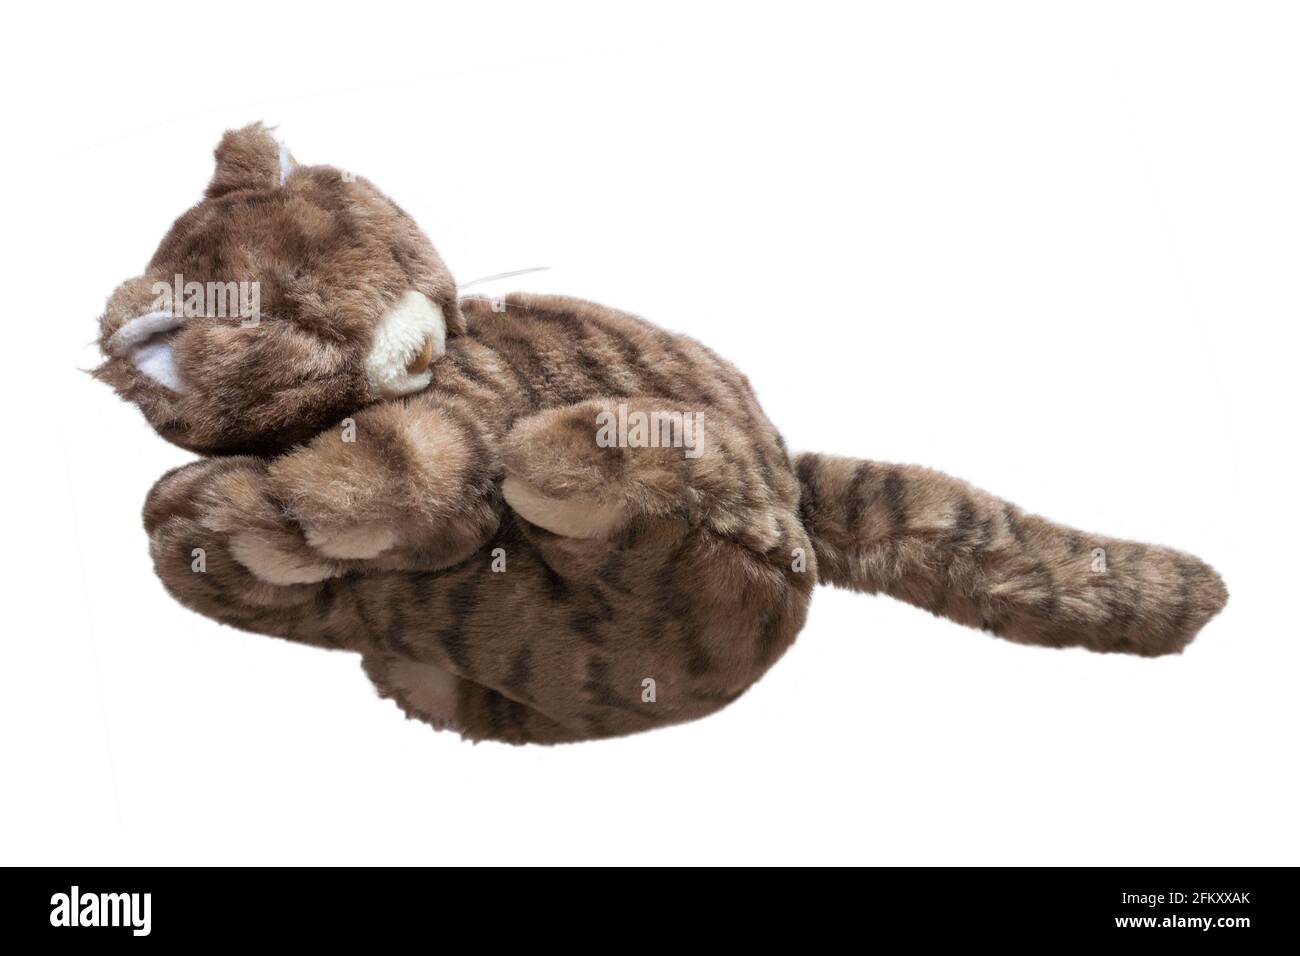 sleeping toy cat soft cuddly toy isolated on white background - stuffed animal Stock Photo